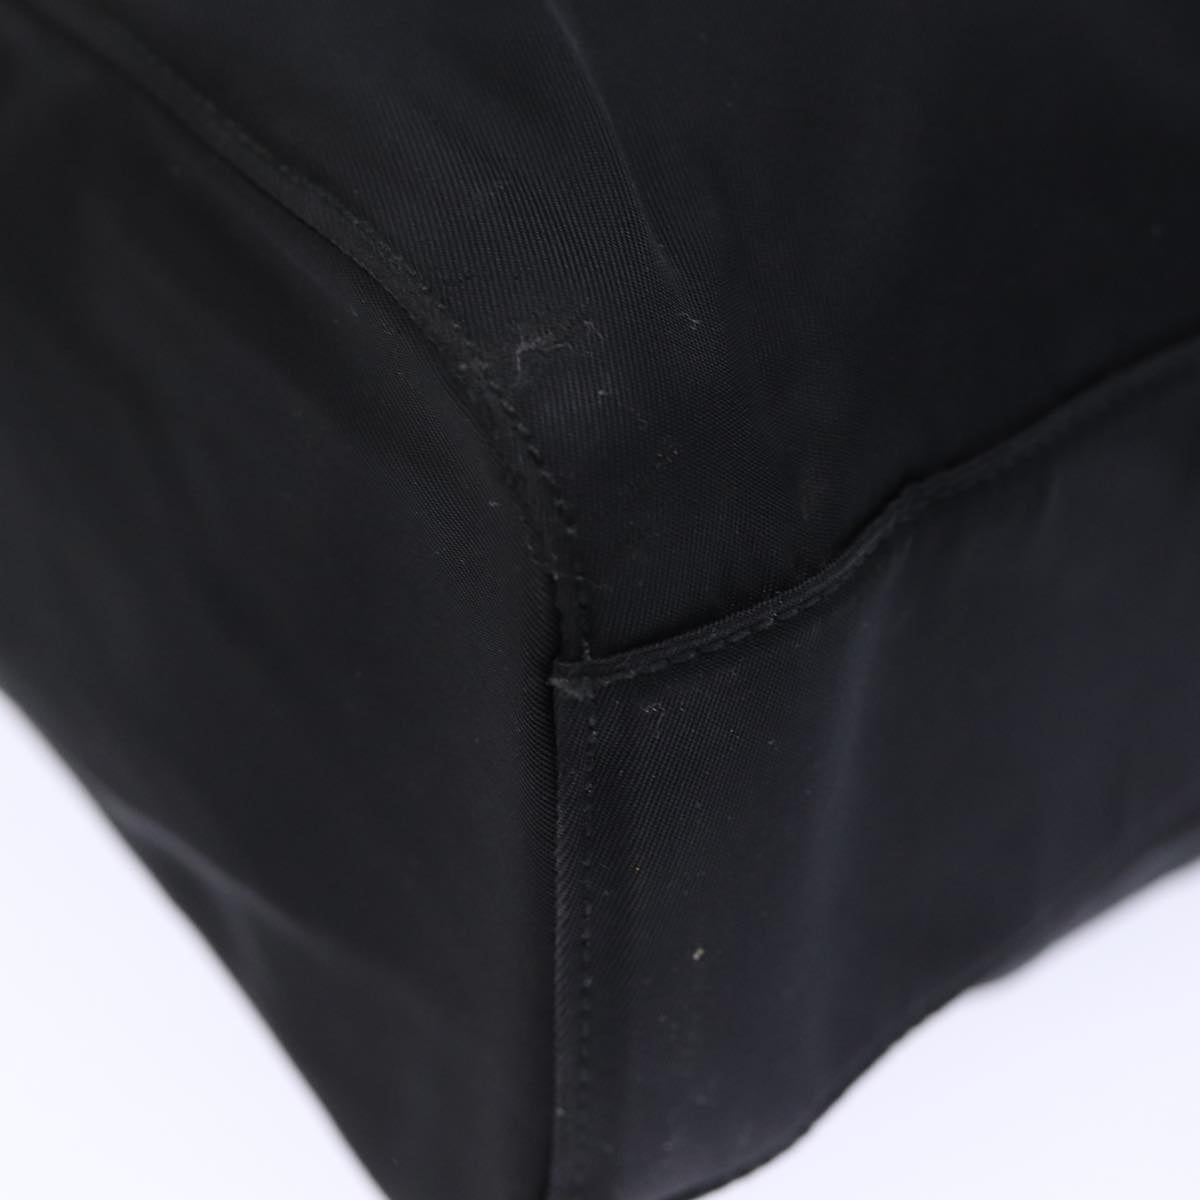 PRADA Chain Shoulder Bag Nylon Black Auth 72672